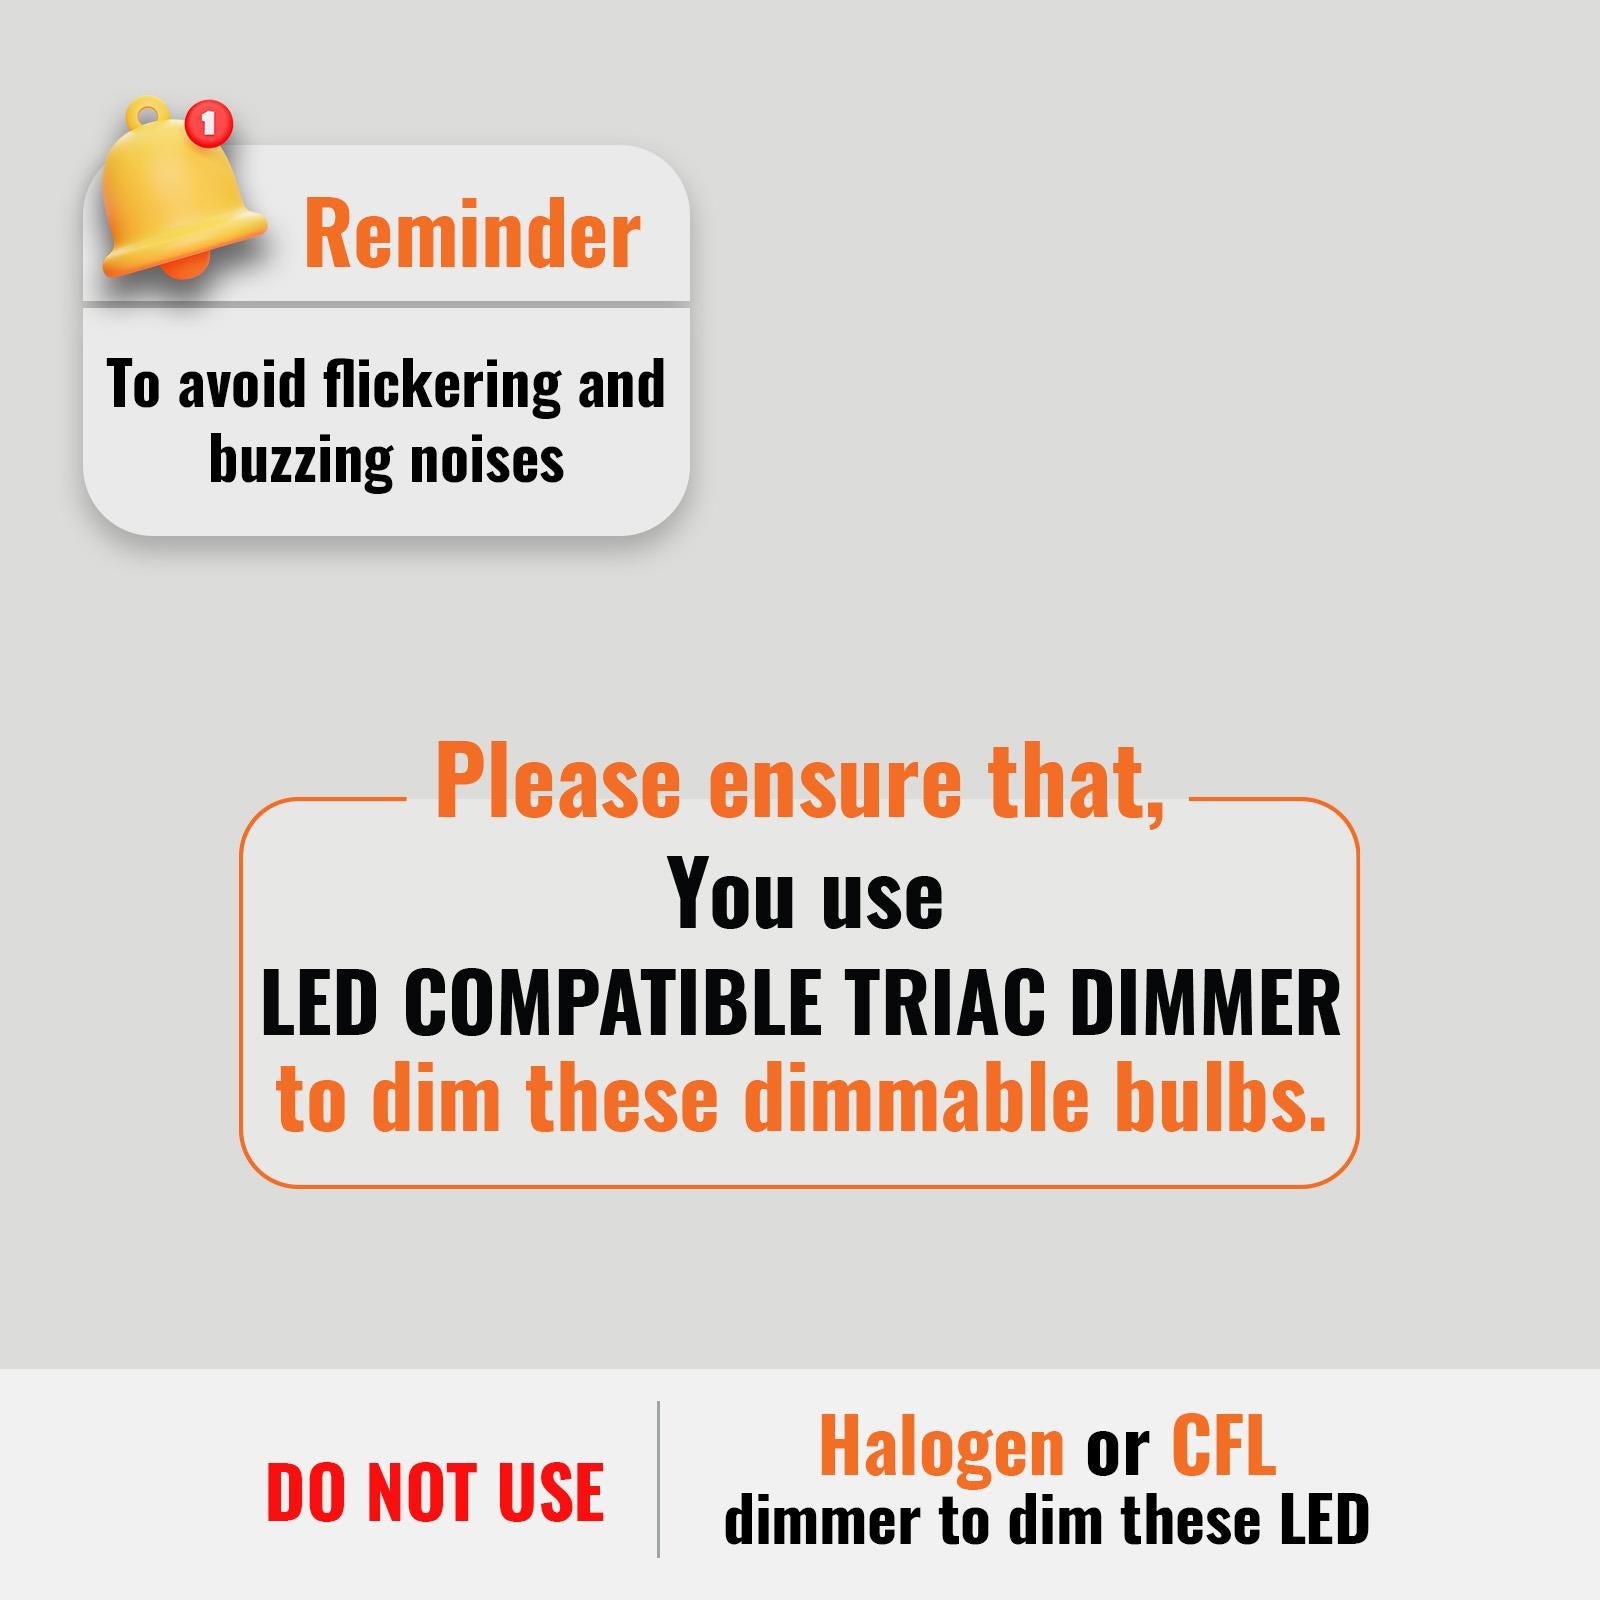 LED Dimmable GLS 8.5W (60w), ES/E27, 806 Lumens, Warm White(2700K), 240V